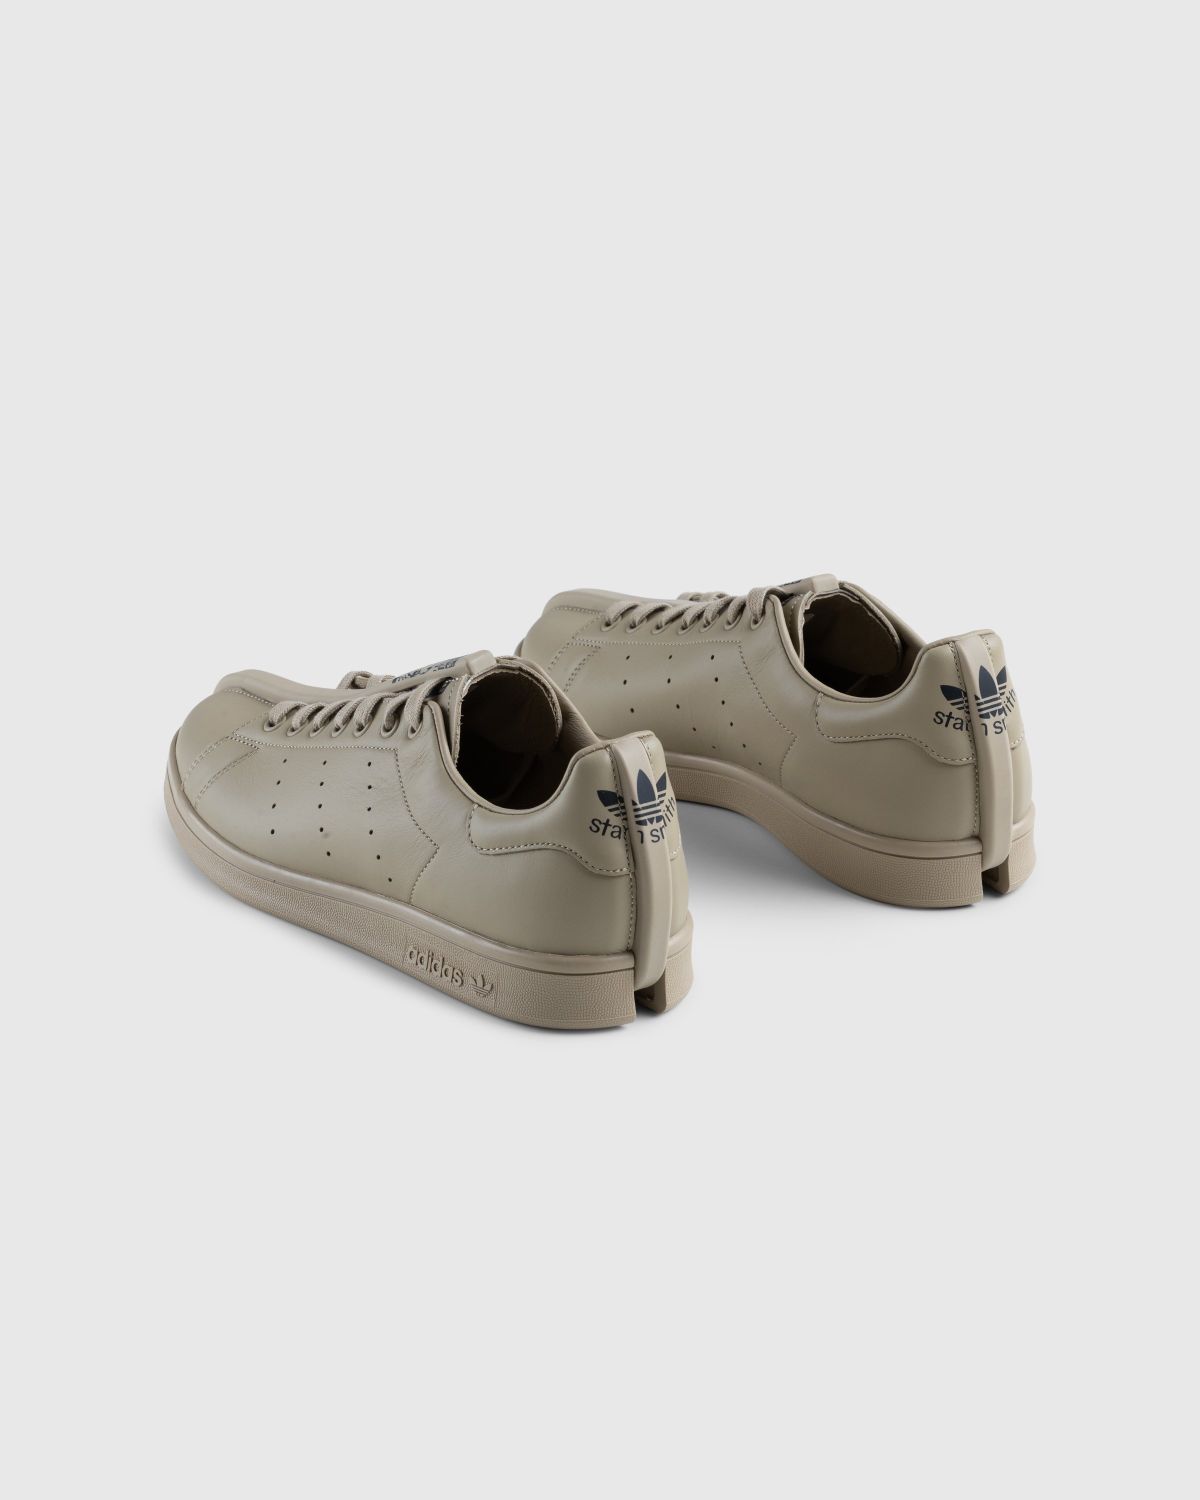 Craig Green x Adidas – CG Split Stan Smith Beige Tone/Core Black - Sneakers - Beige - Image 4